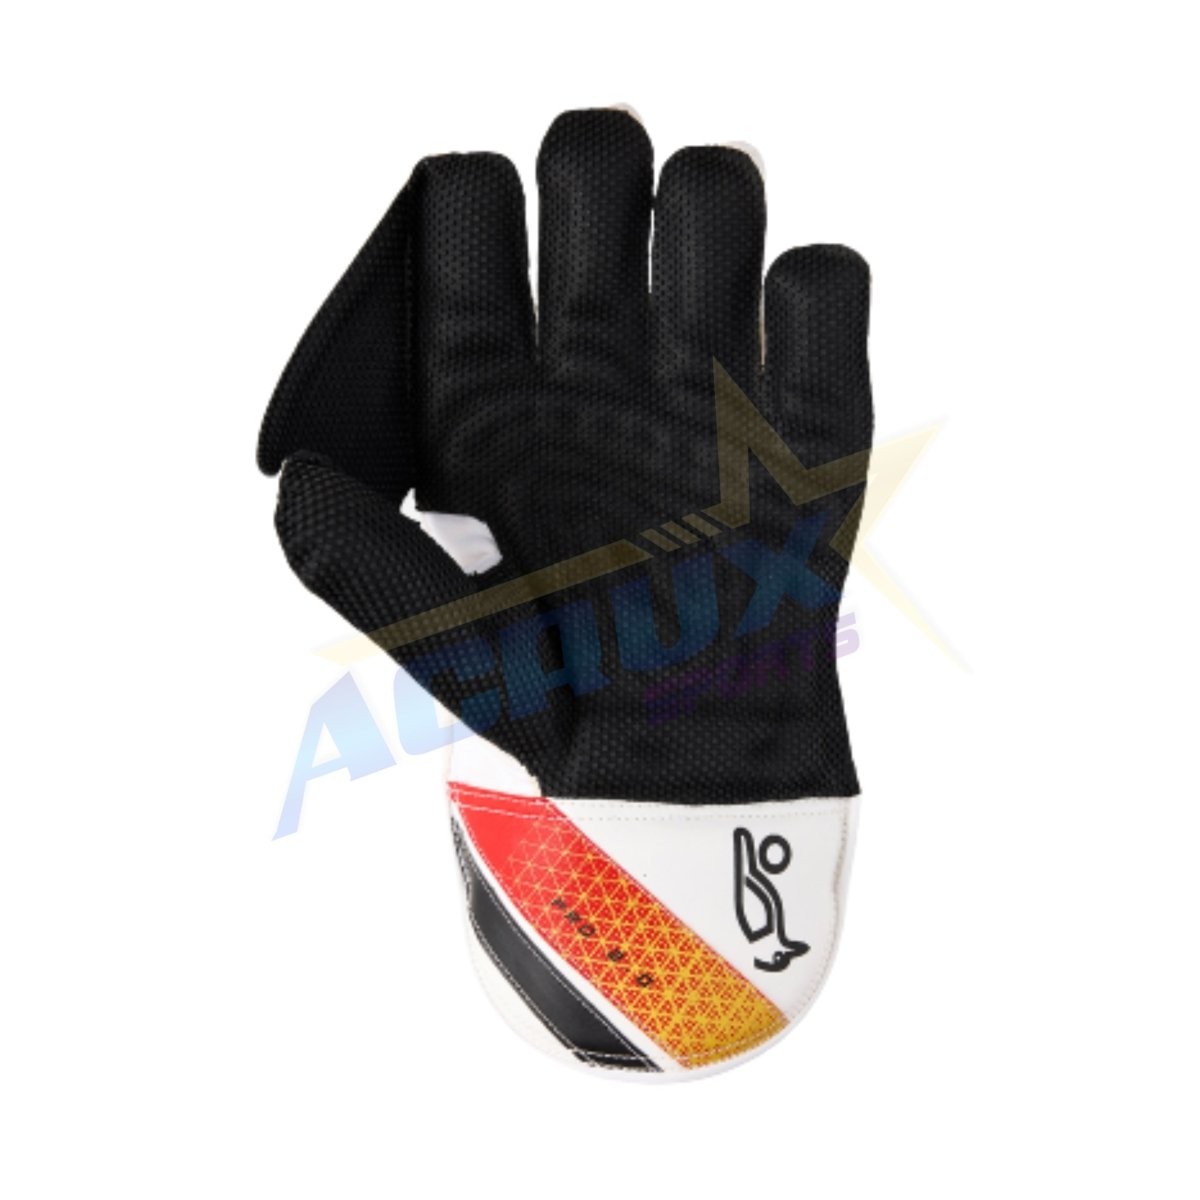 Kookaburra Beast Pro 2.0 Cricket Wicket Keeping Gloves